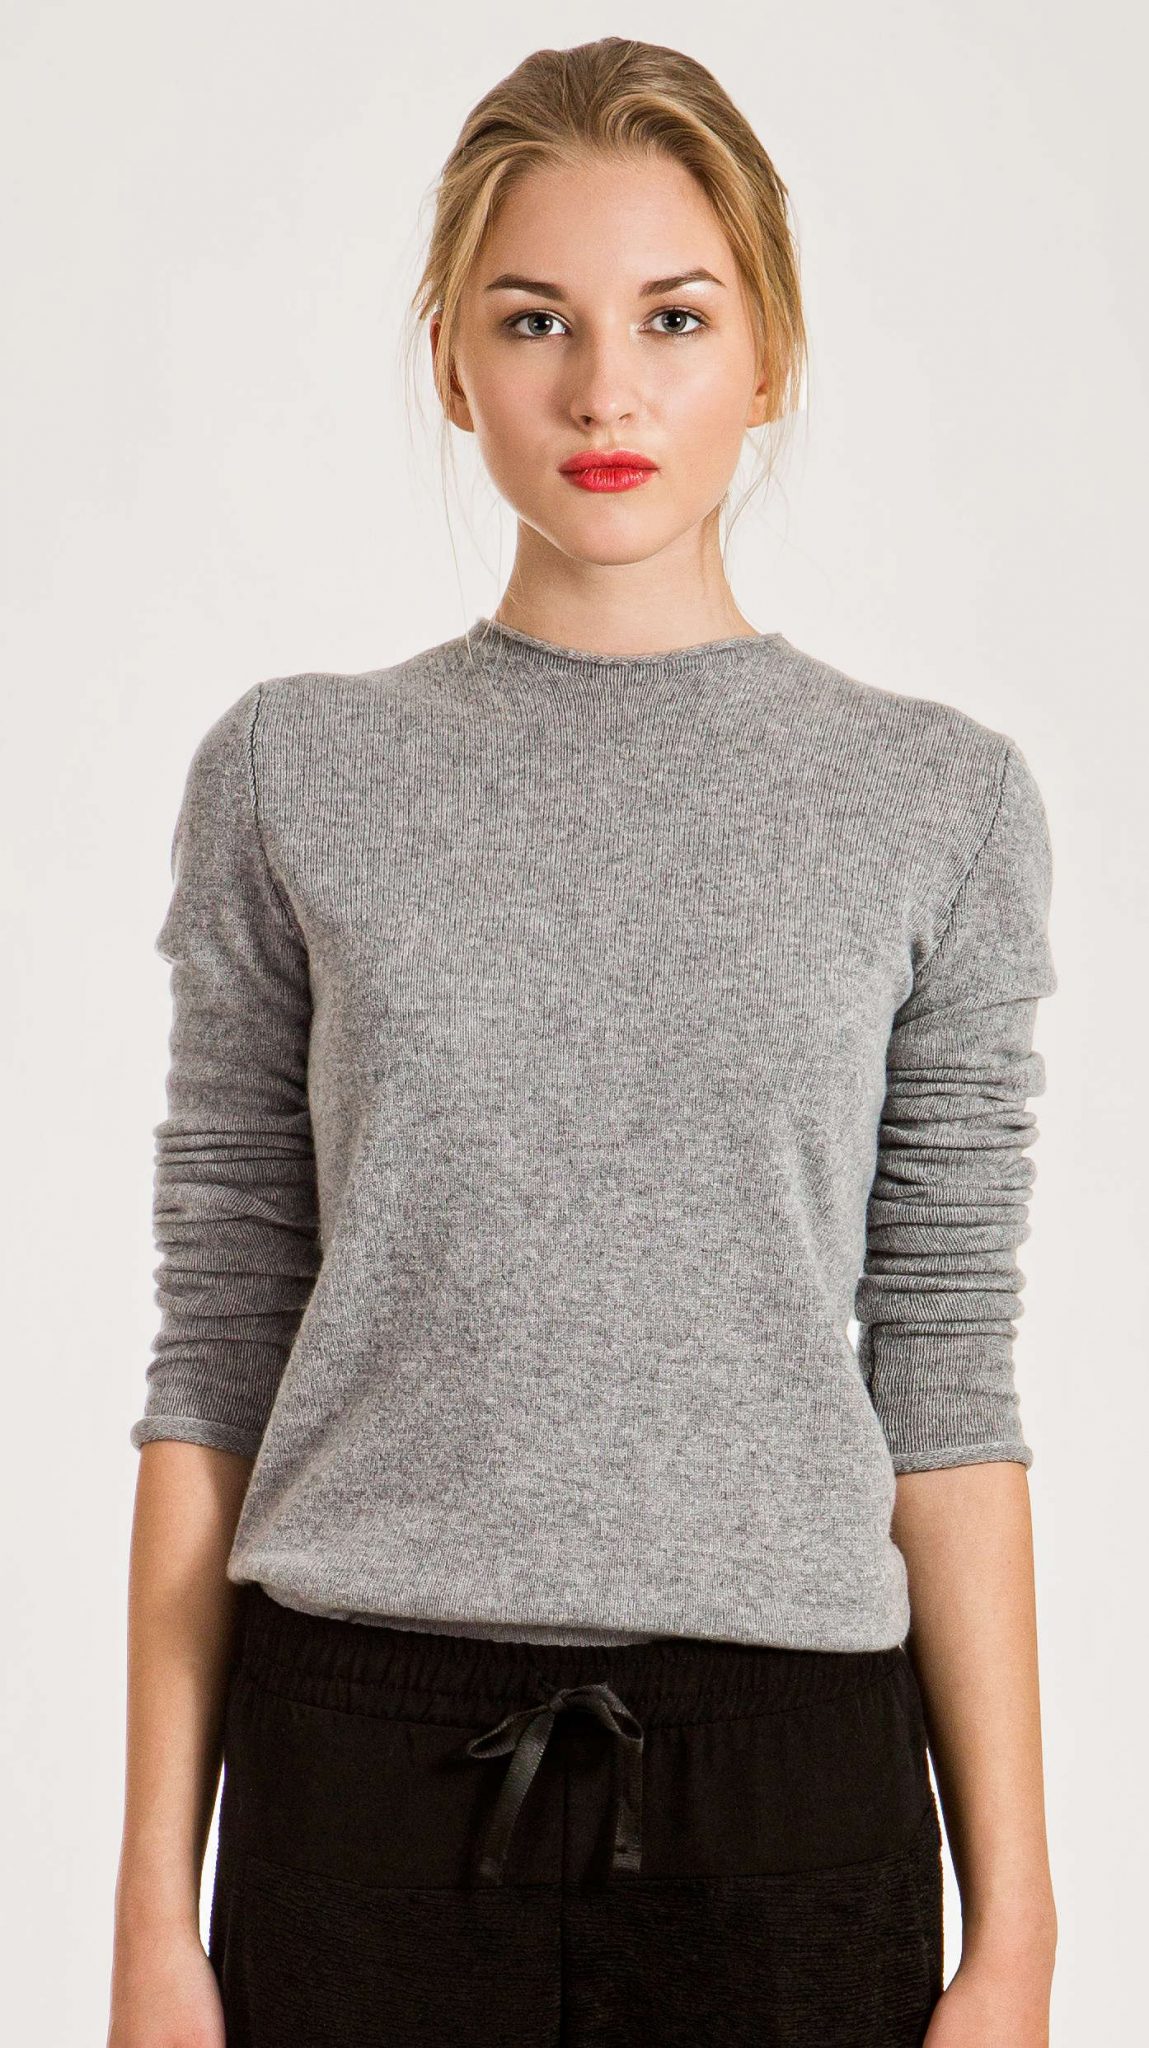 100% Cashmere Womens Sweater - 1-ply knit - Handmade - Krista Elsta